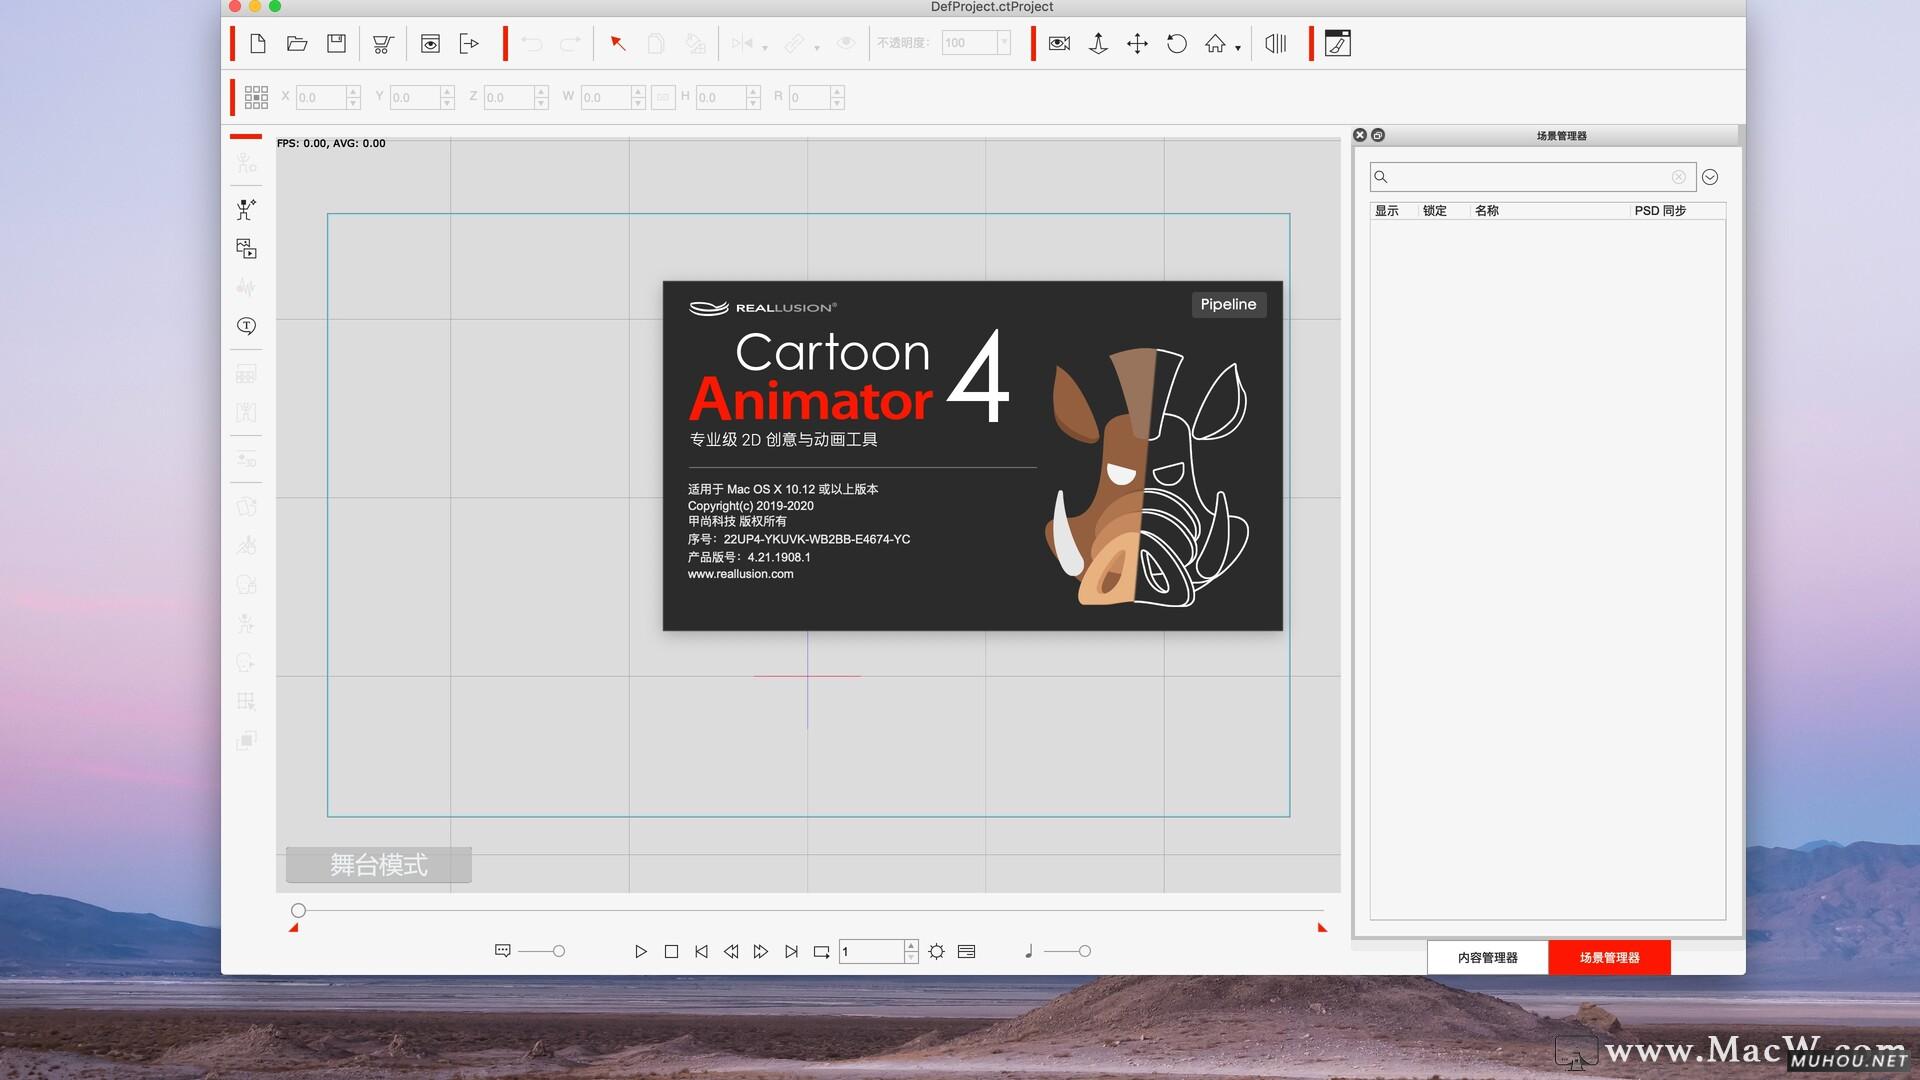 Reallusion Cartoon Animator 4.4.2408.1 Pipeline破解版下载 (MAC动态角色制作软件) 支持Silicon M1插图2